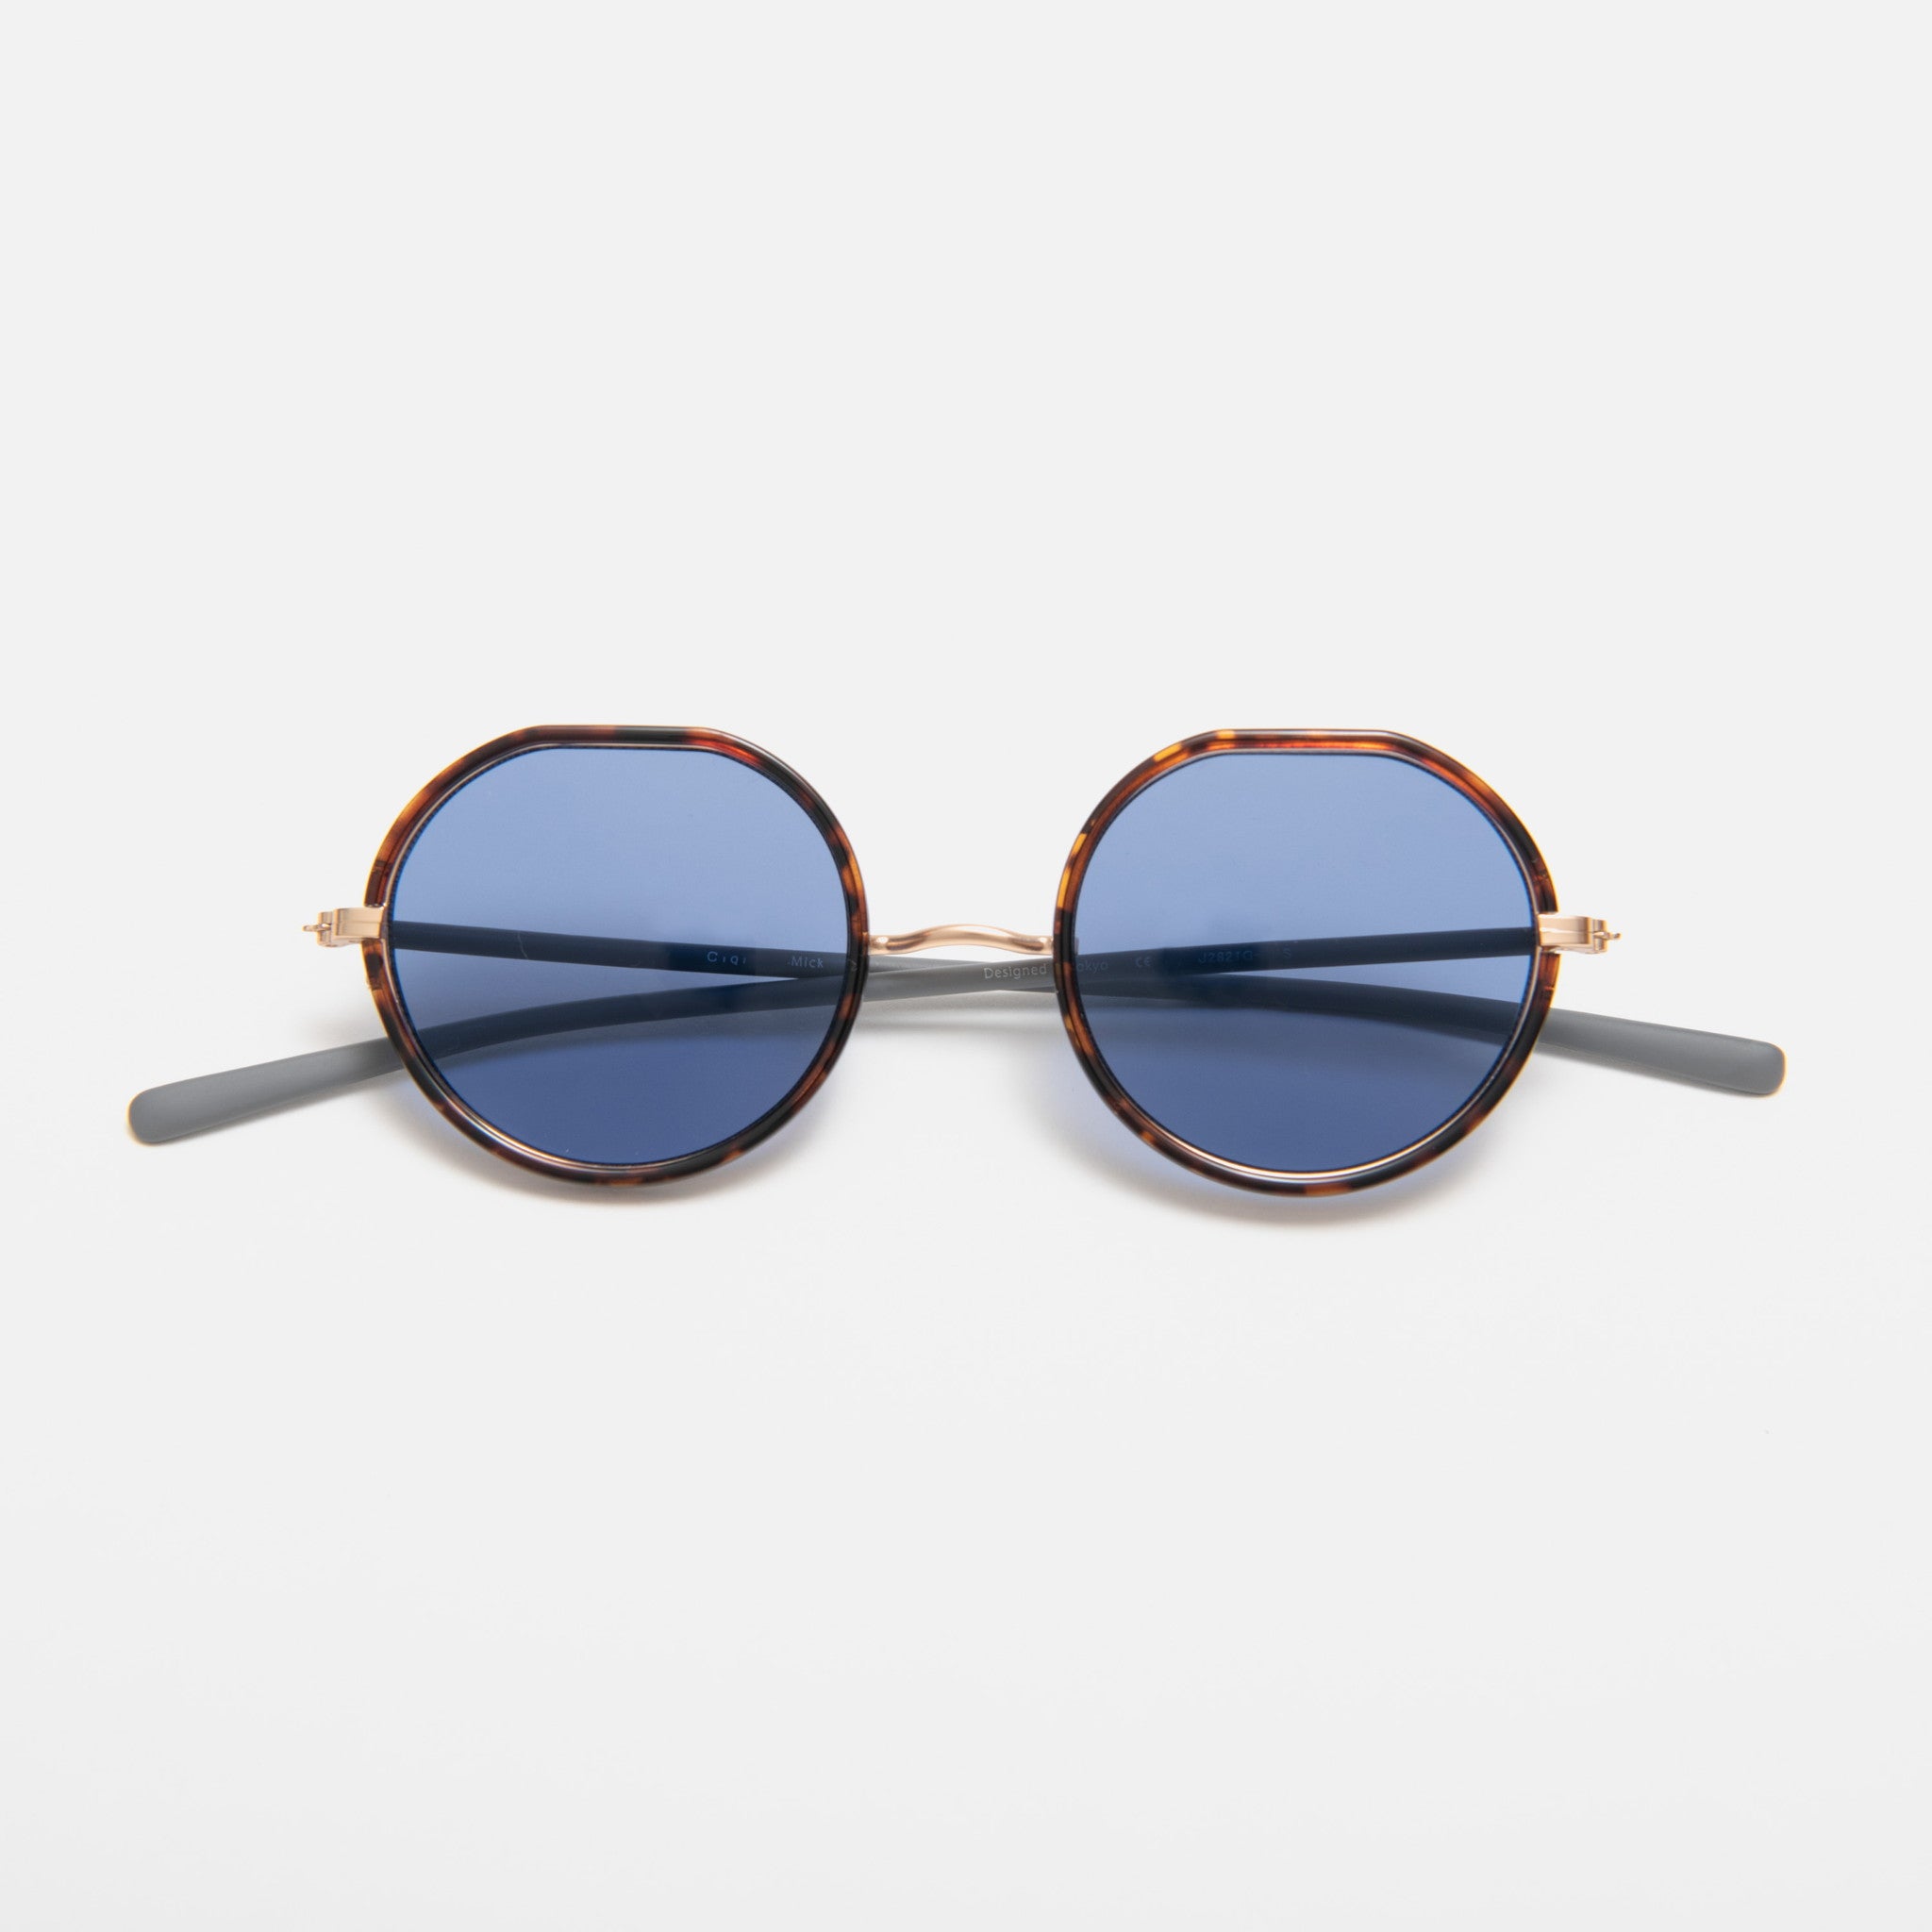 【Ciqi】MIKK サングラス Slate Gray Blue Lens sunglasses(ミック スレートグレー ブルーレンズ)